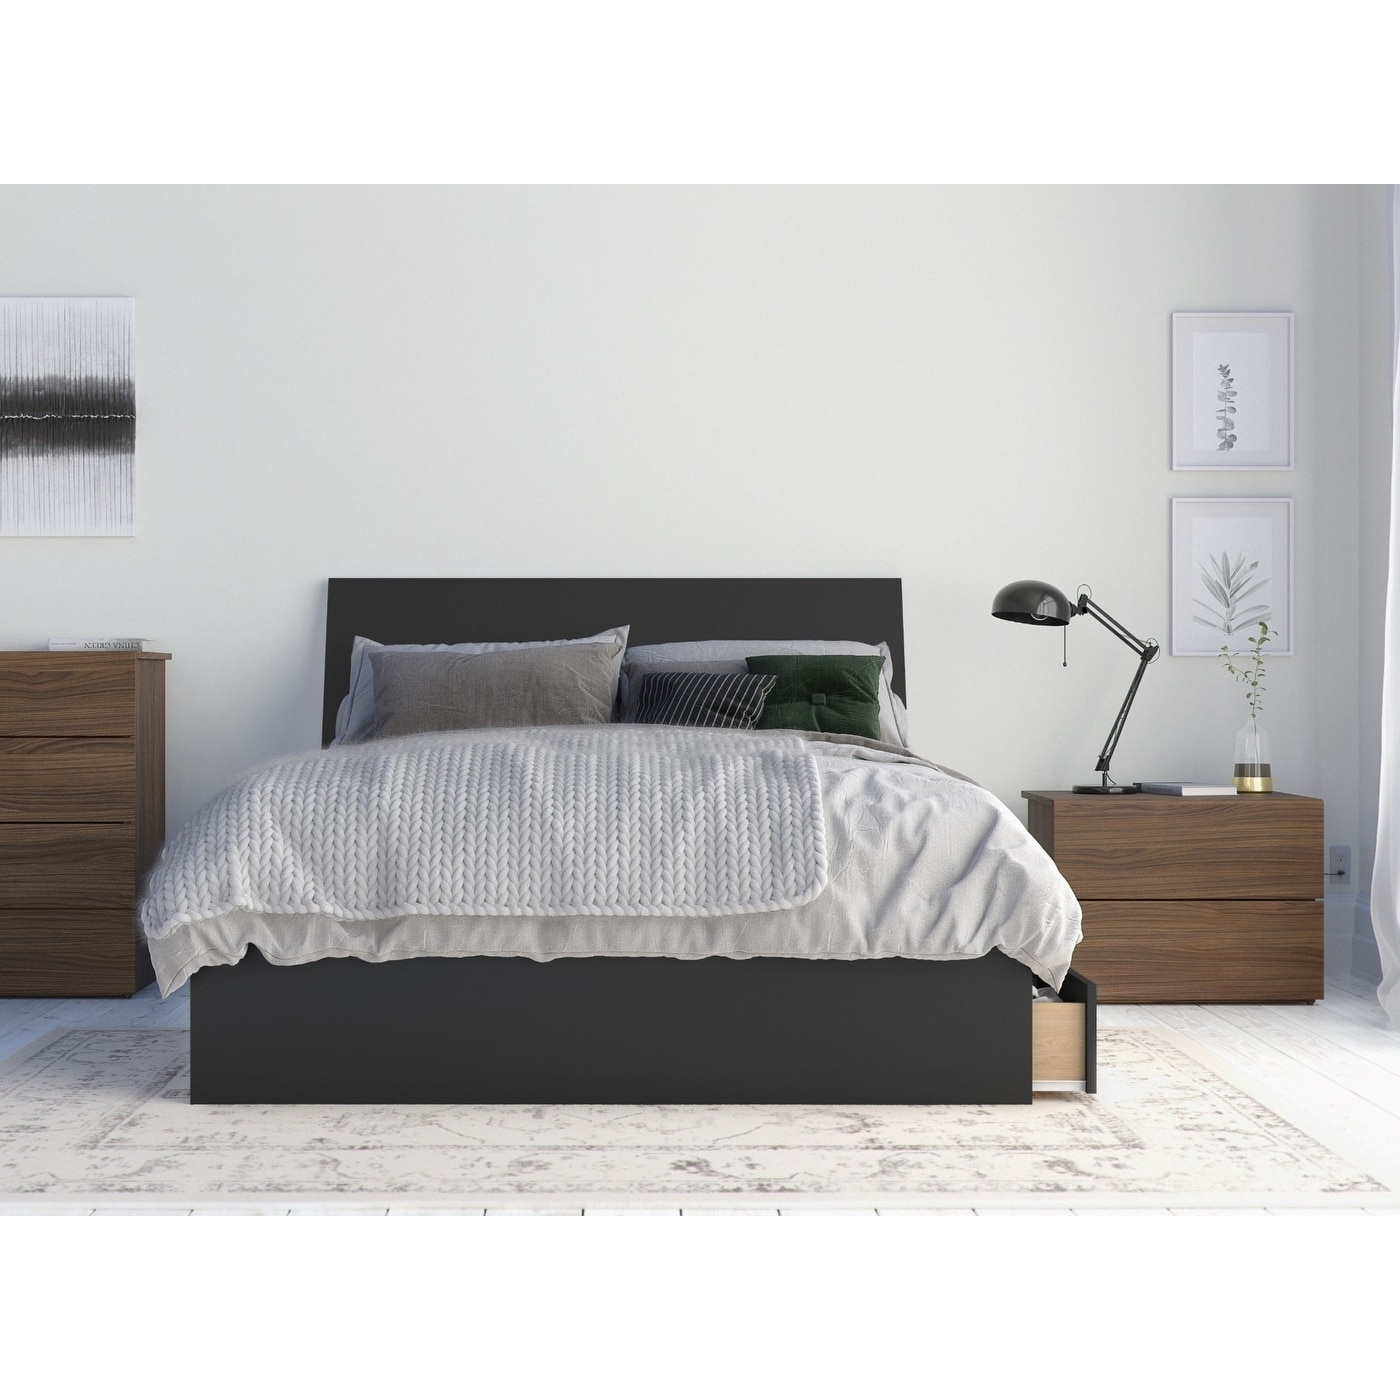 Nexera Wasabi 3-piece Bedroom Set  Walnut and Black